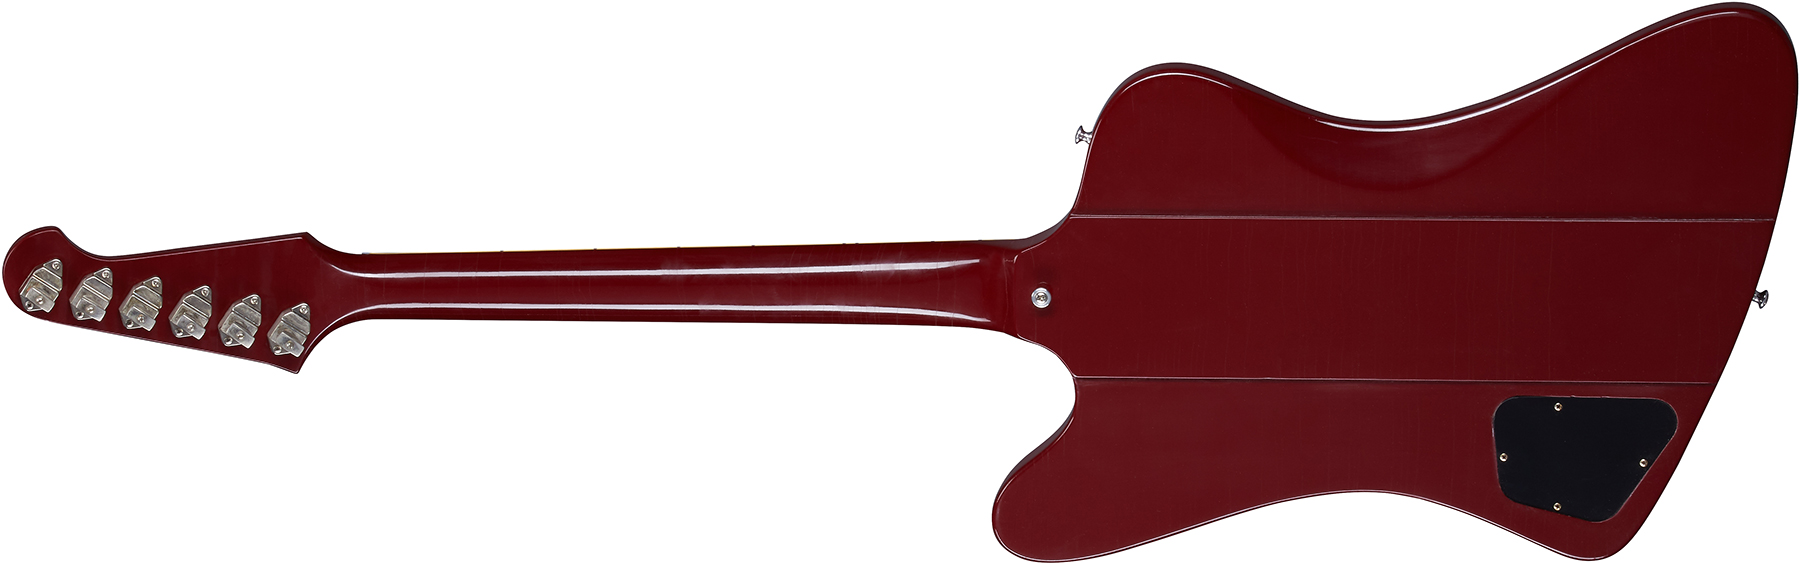 Gibson Custom Shop Murphy Lab Firebird 1963 Maestro Reissue Trem 2mh Rw - Light Aged Cardinal Red - Retro rock electric guitar - Variation 1